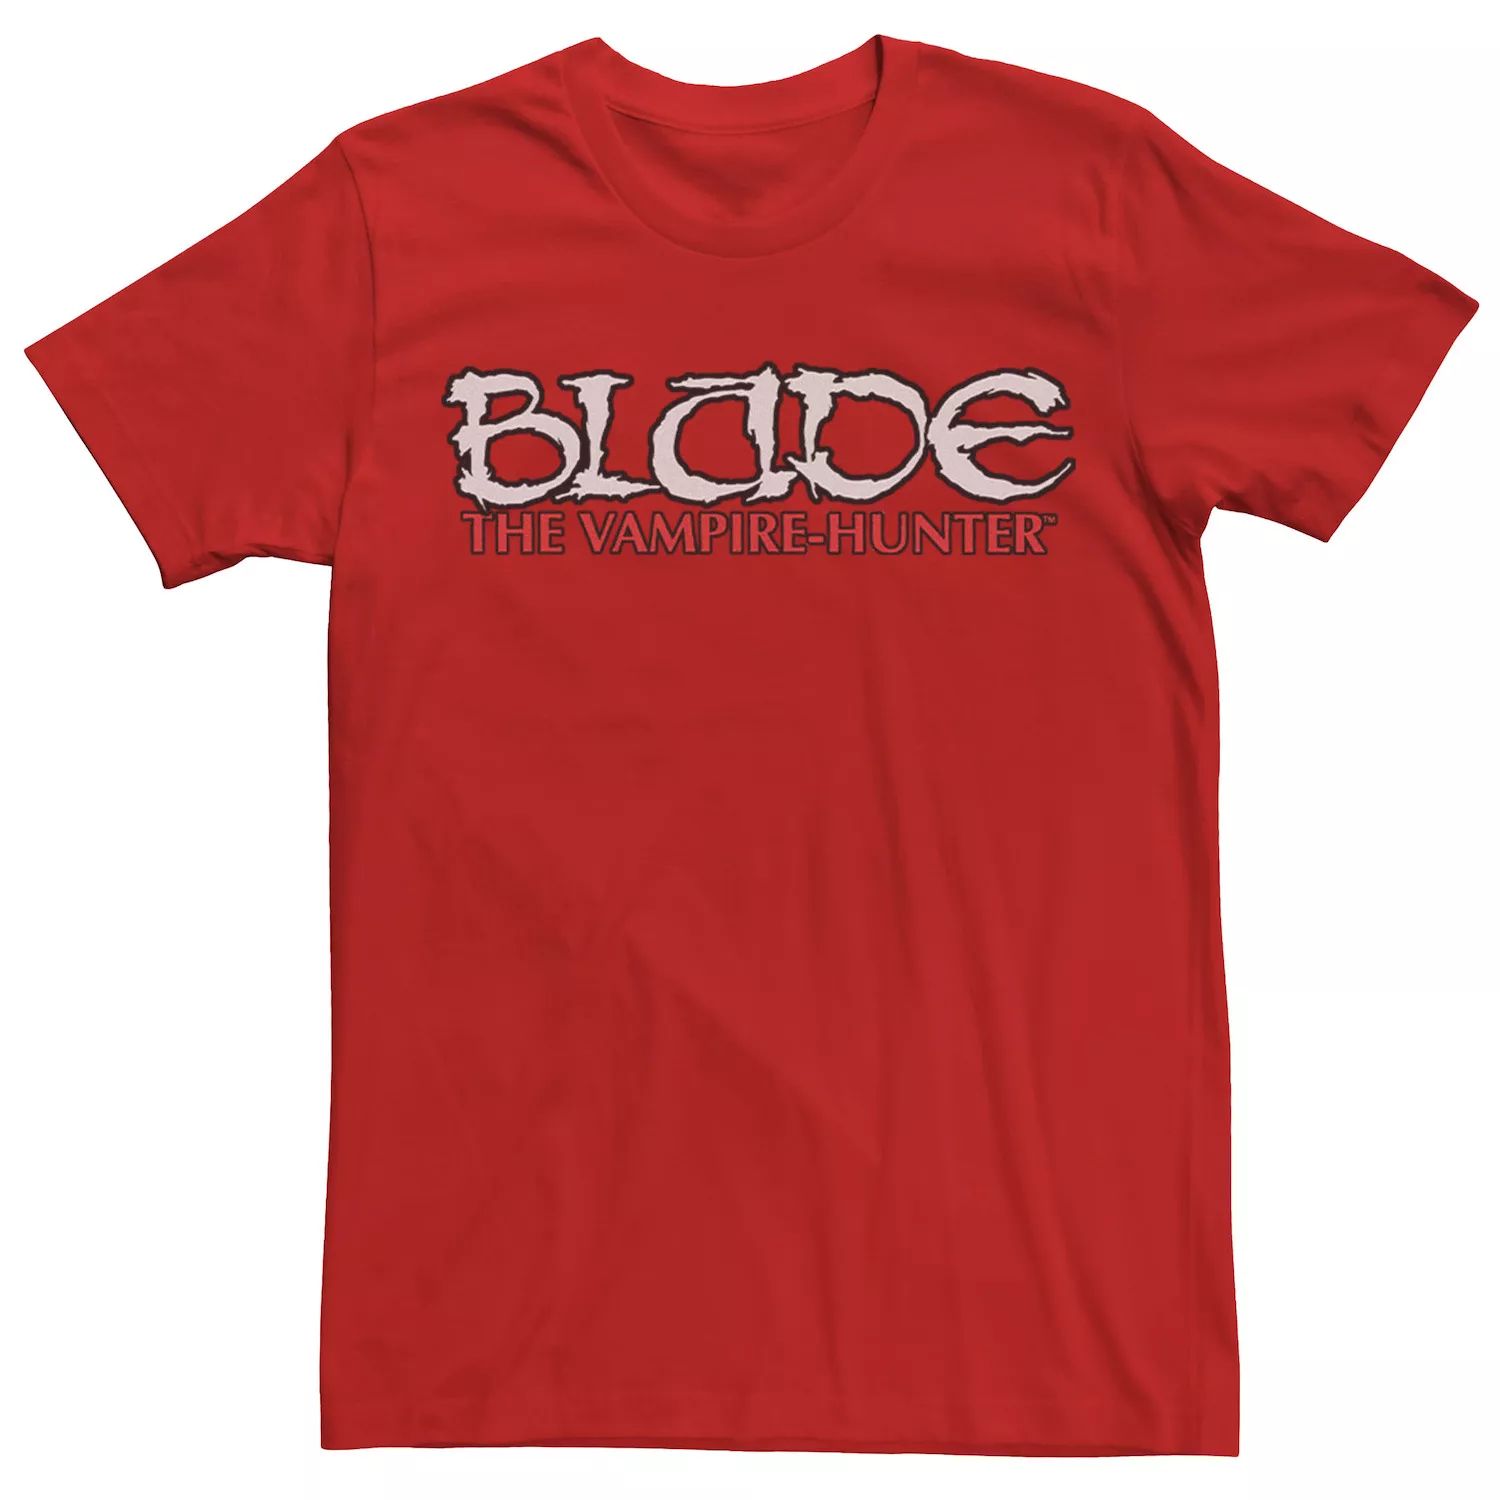 Мужская футболка с логотипом Blade The Vampire Hunter Marvel